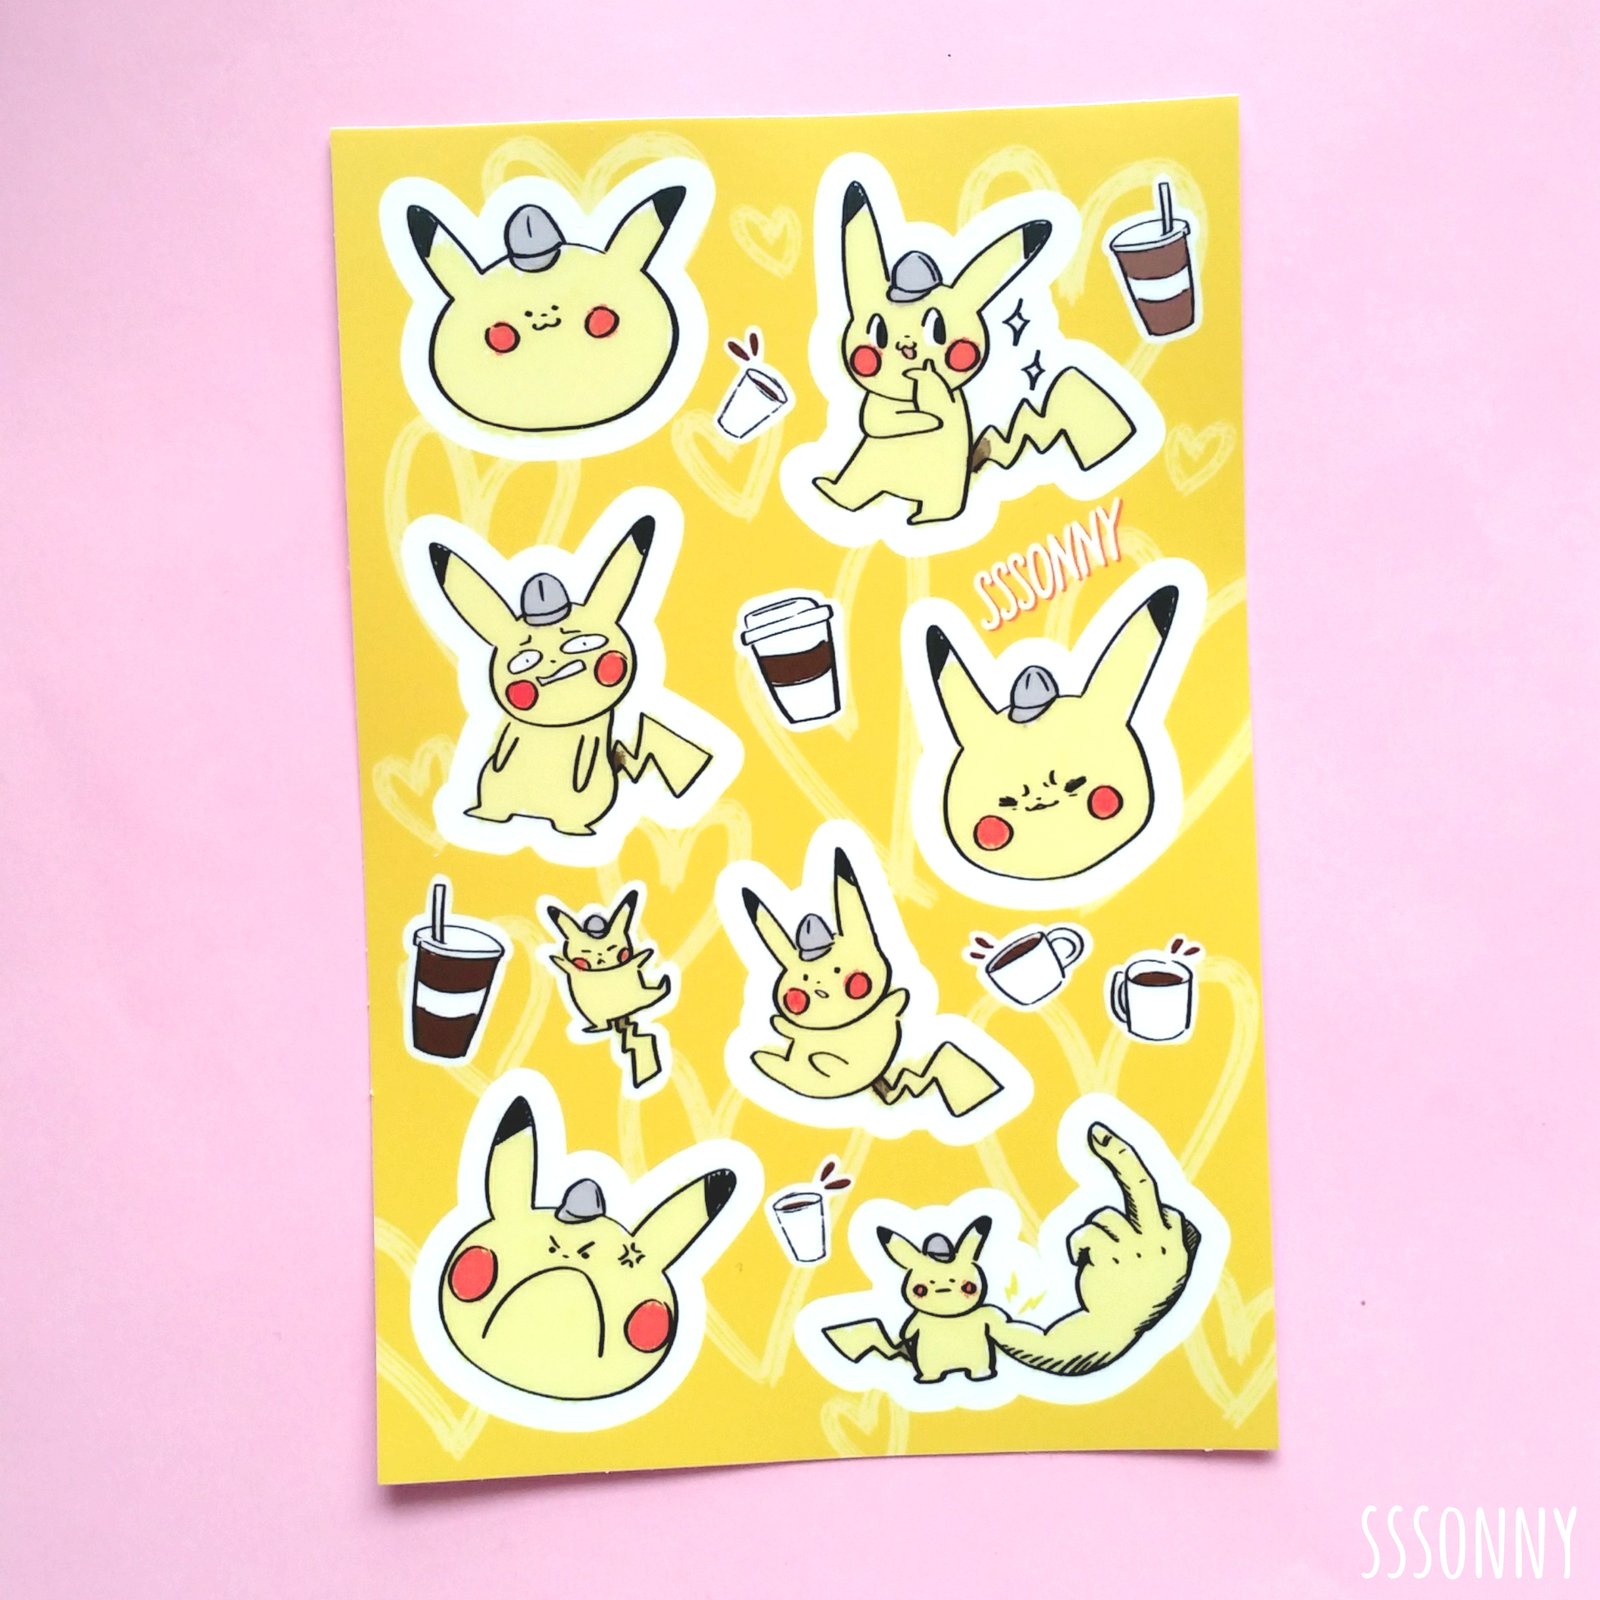 Pokemon Stickers New Sheet of 18  Pokemon stickers, Pokemon, All